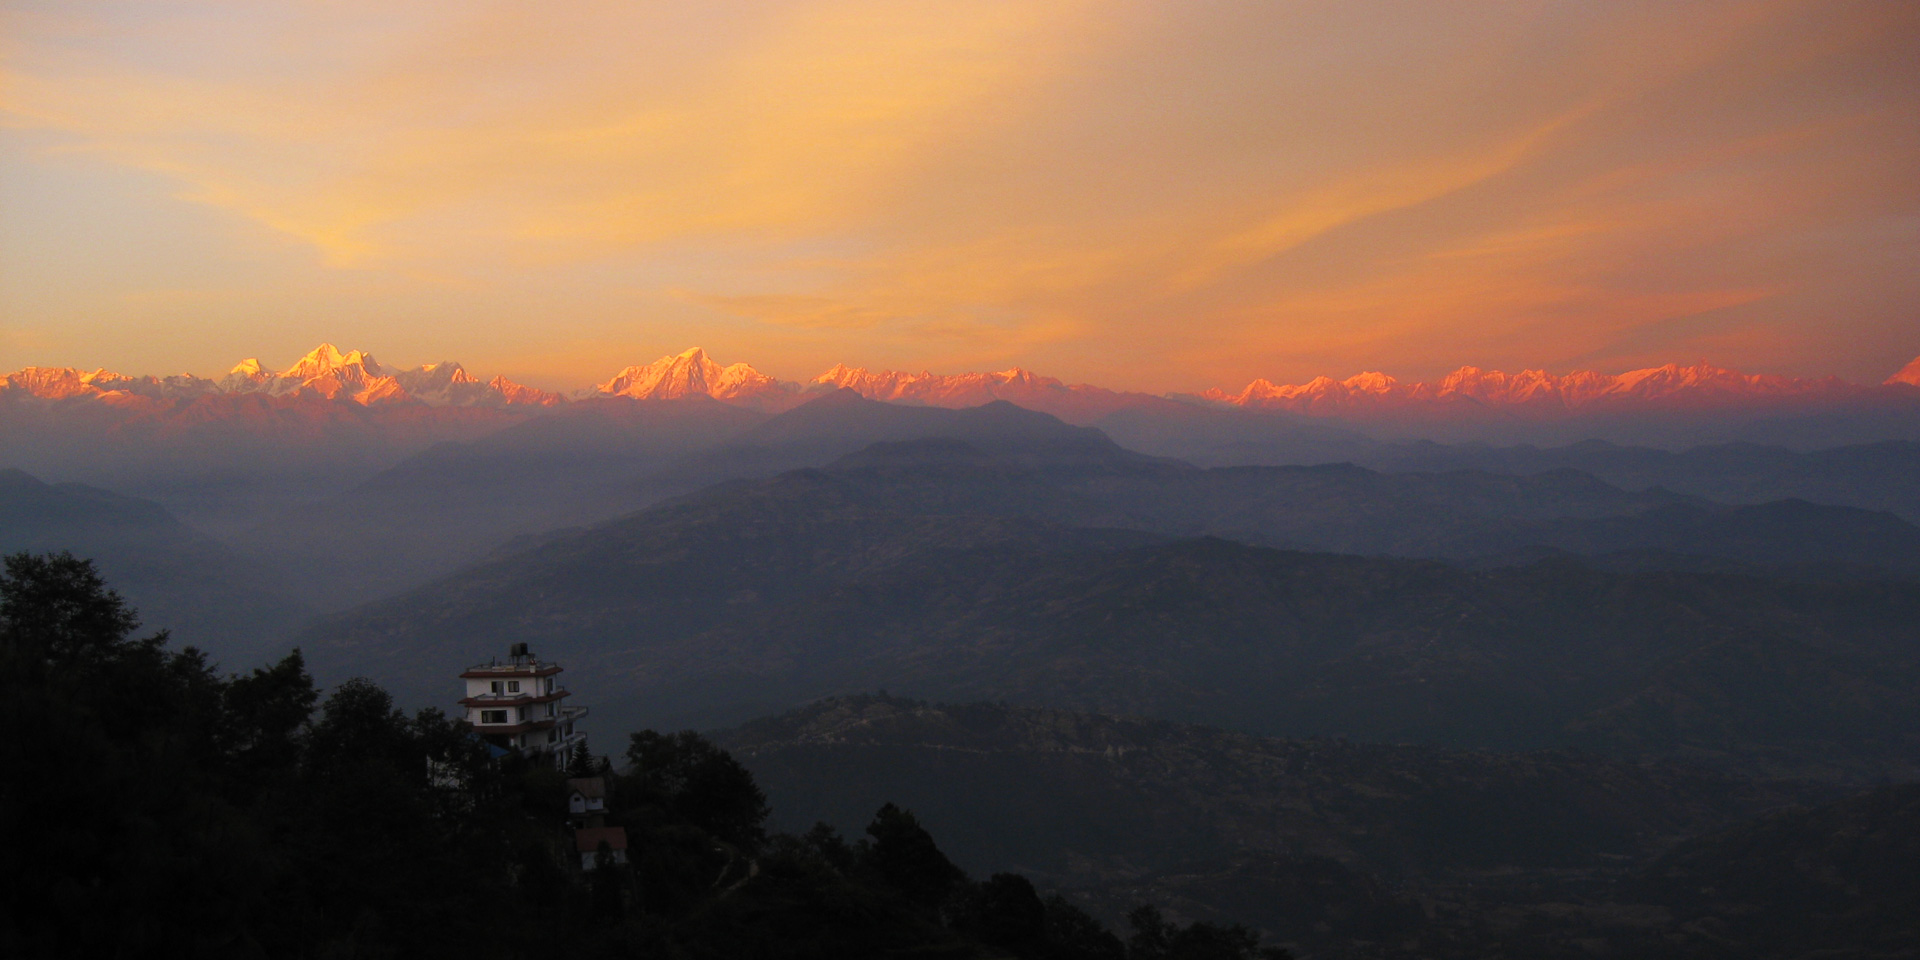 Sunset from Club Himalaya Hotel in Nagarkot, Nepal